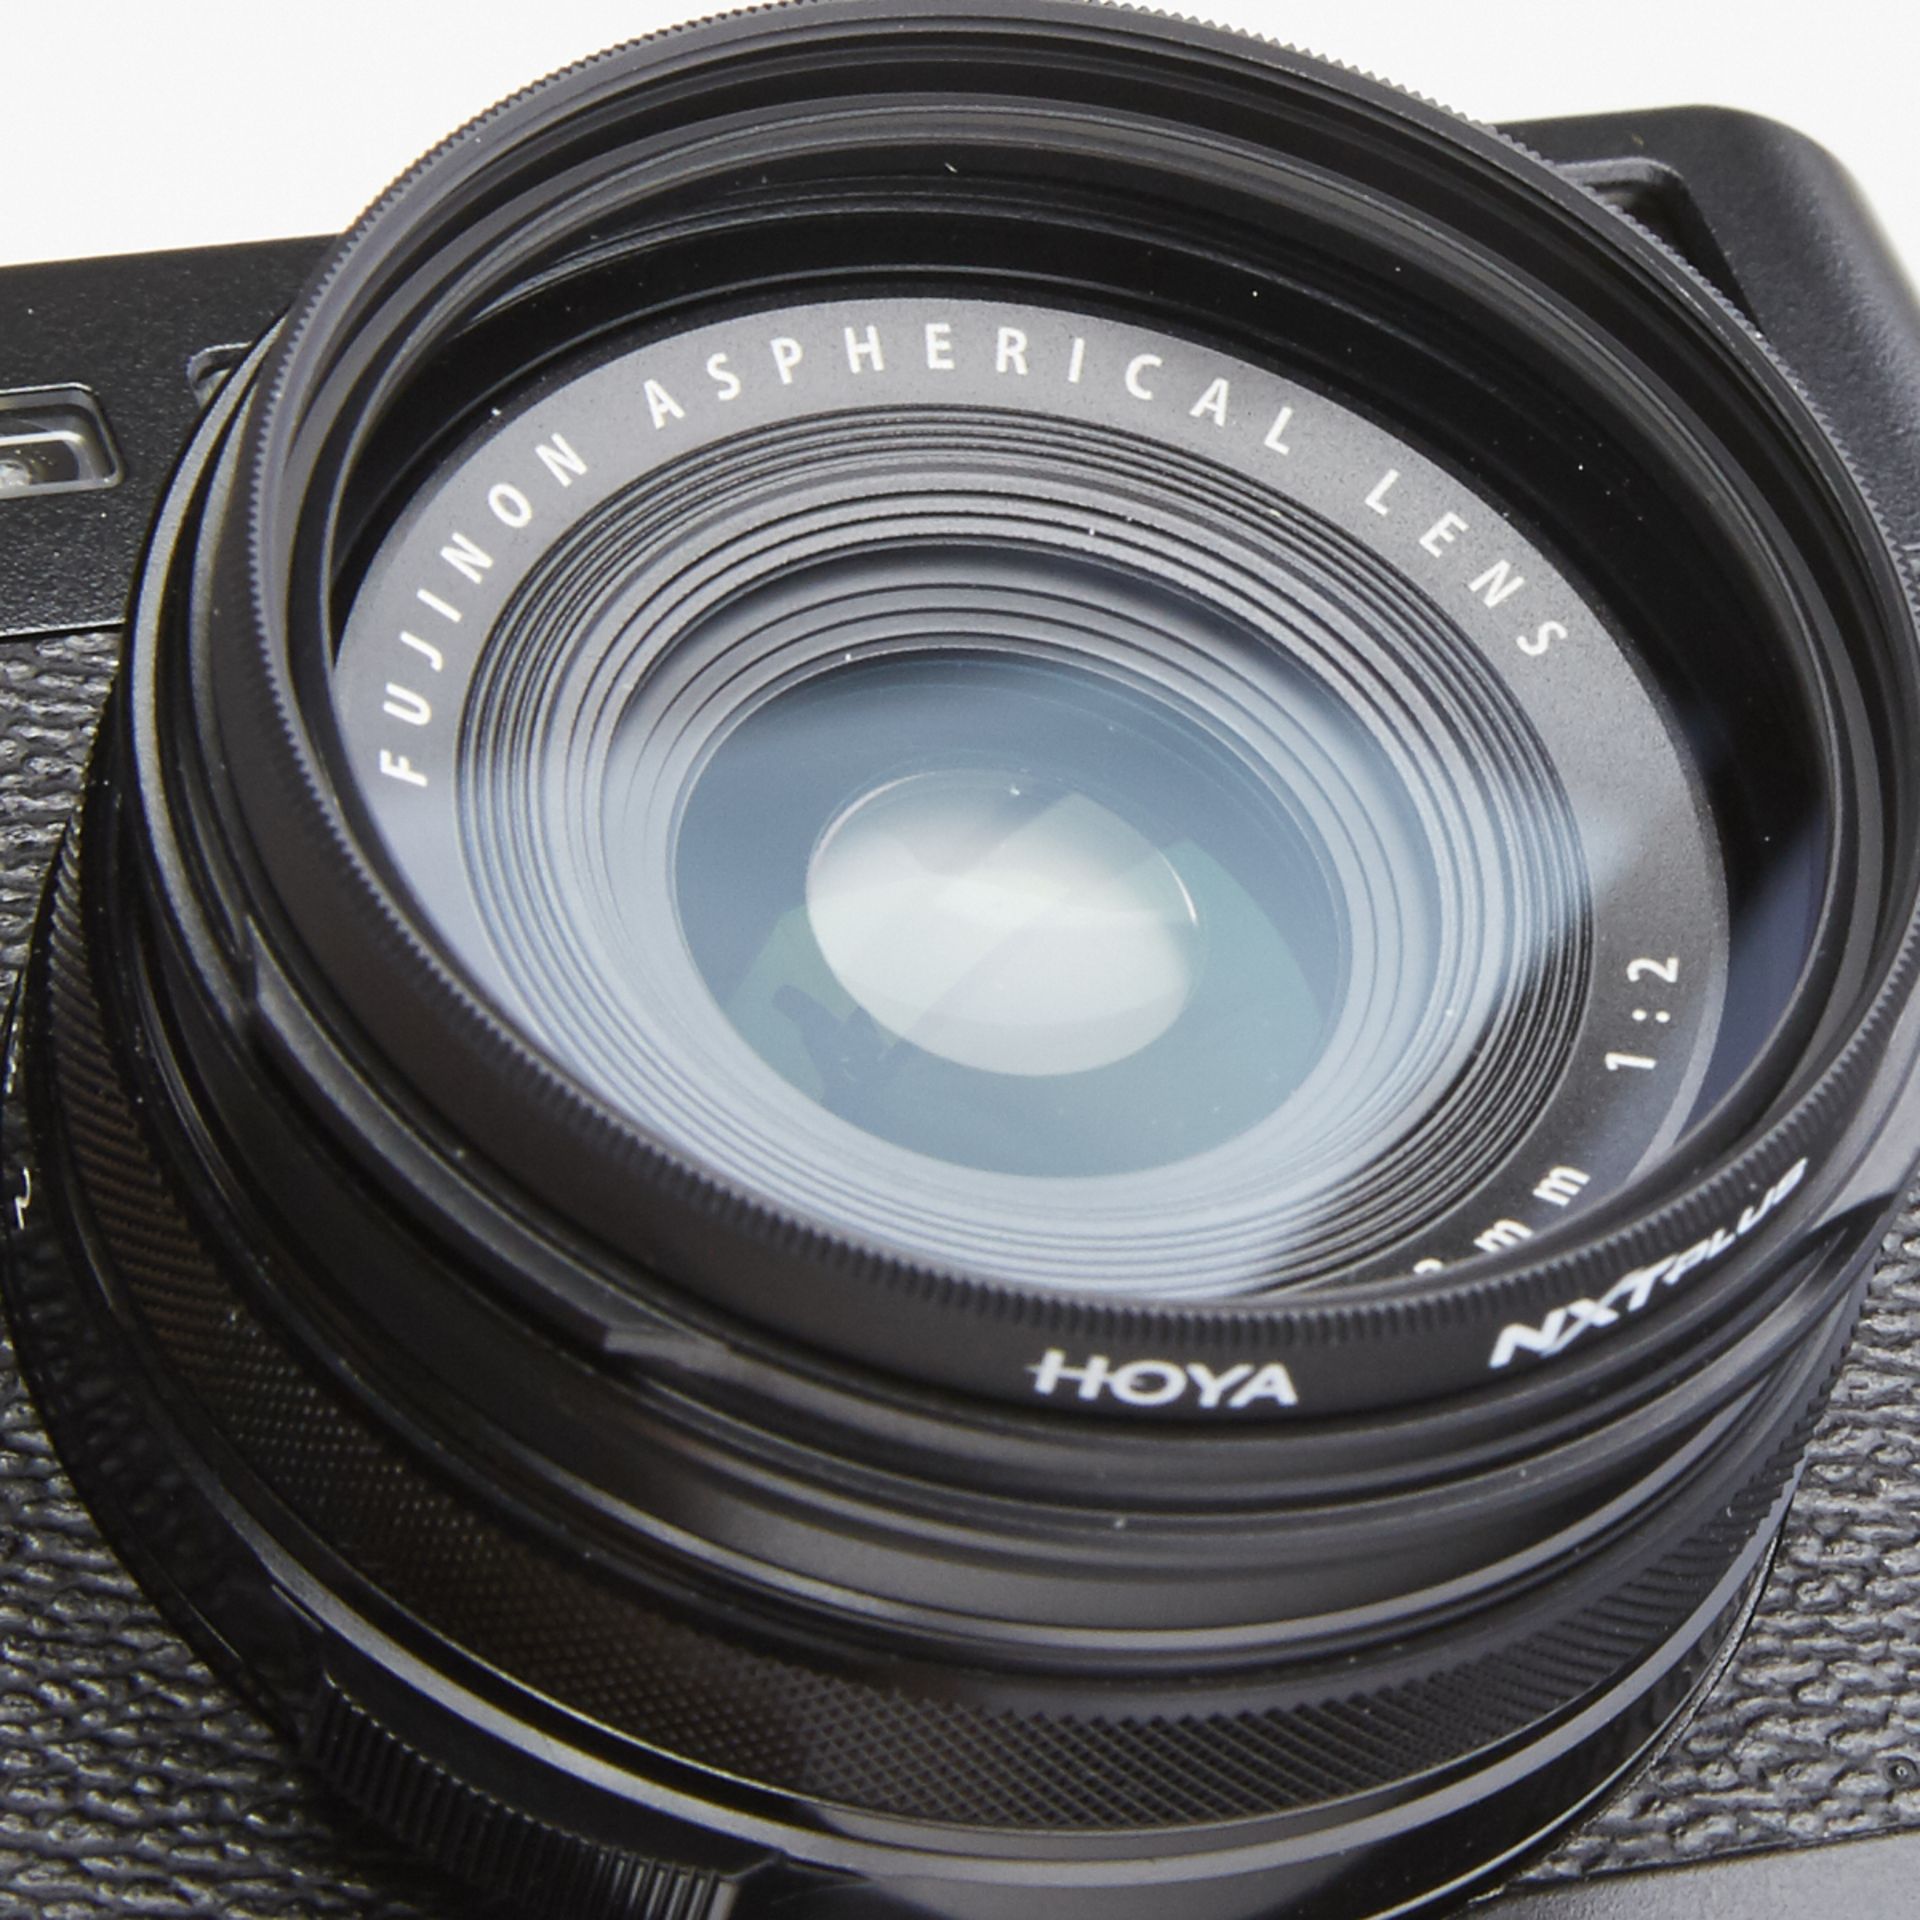 Fujifilm X100F Camera - New in box - Image 4 of 10